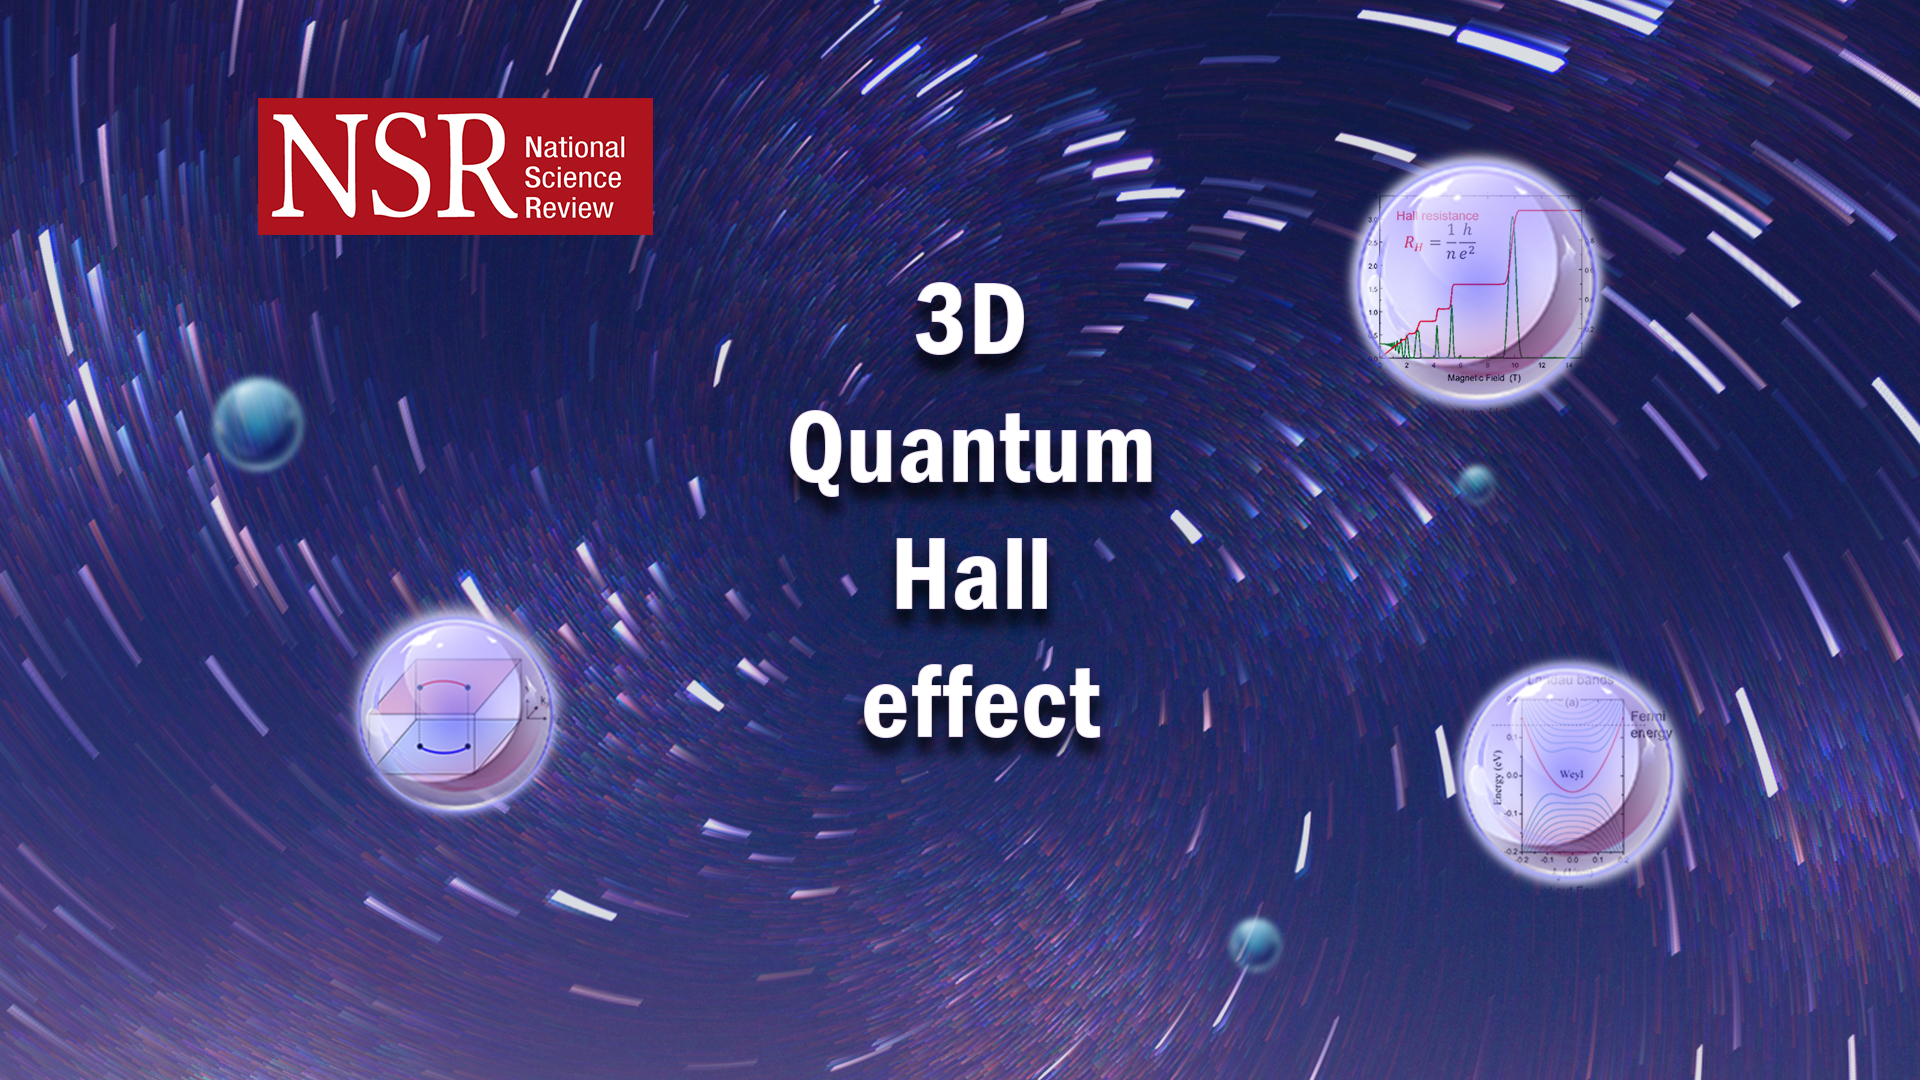 3D Quantum Hall Effect verified by SUSTech researchers